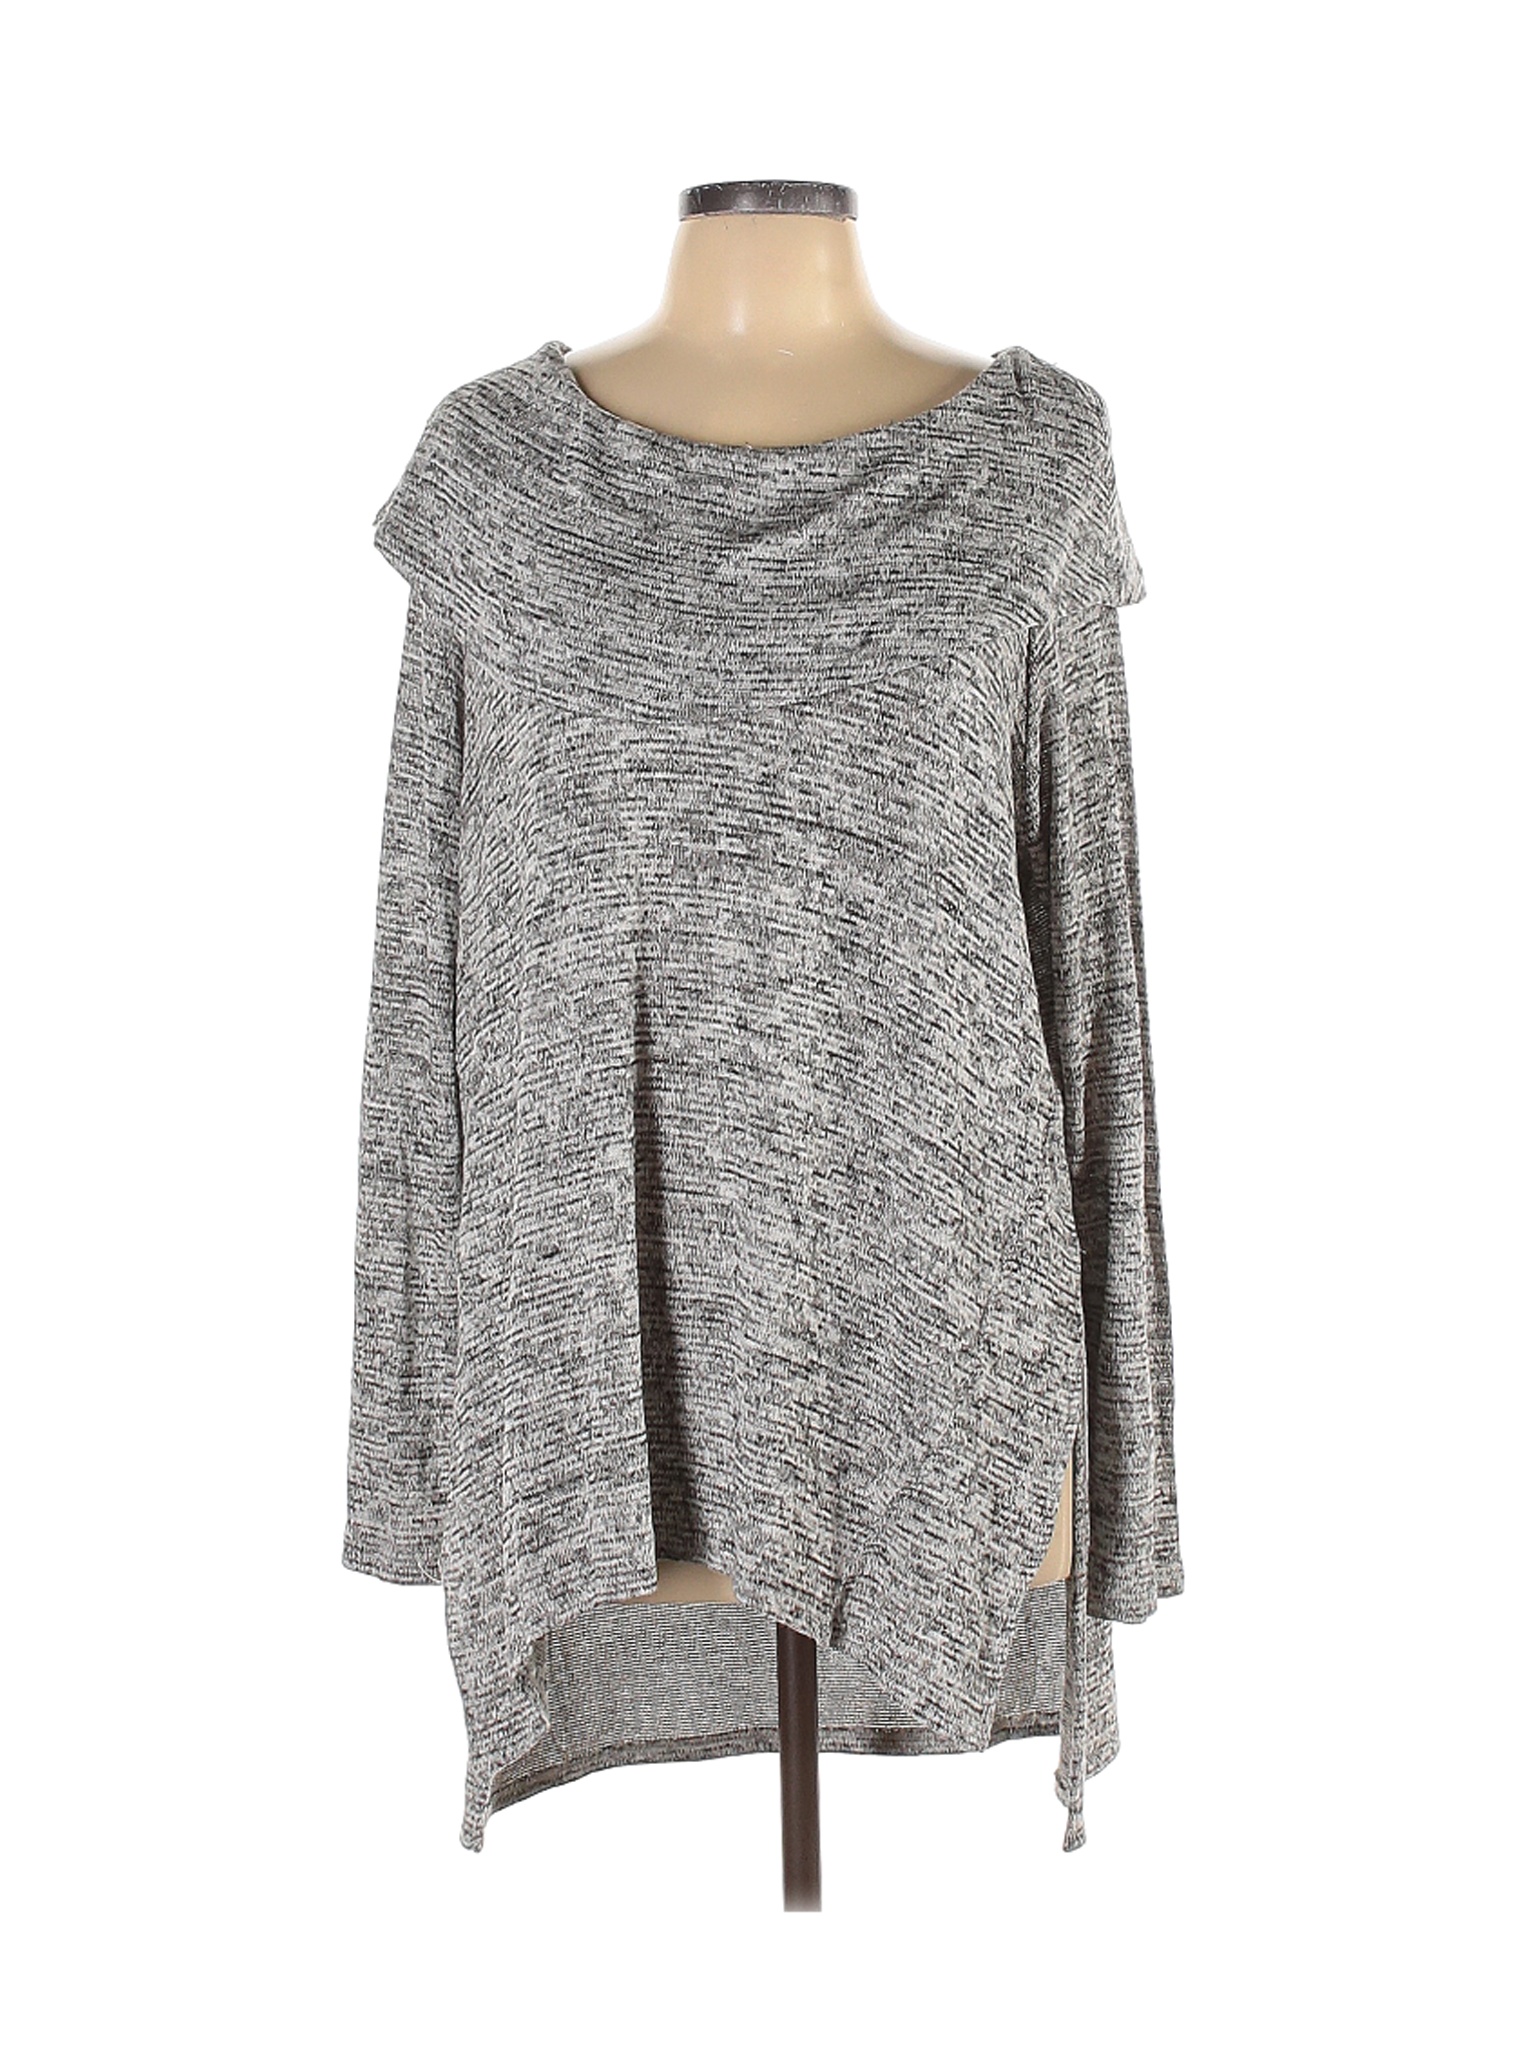 Mossimo Women Gray Pullover Sweater XL | eBay